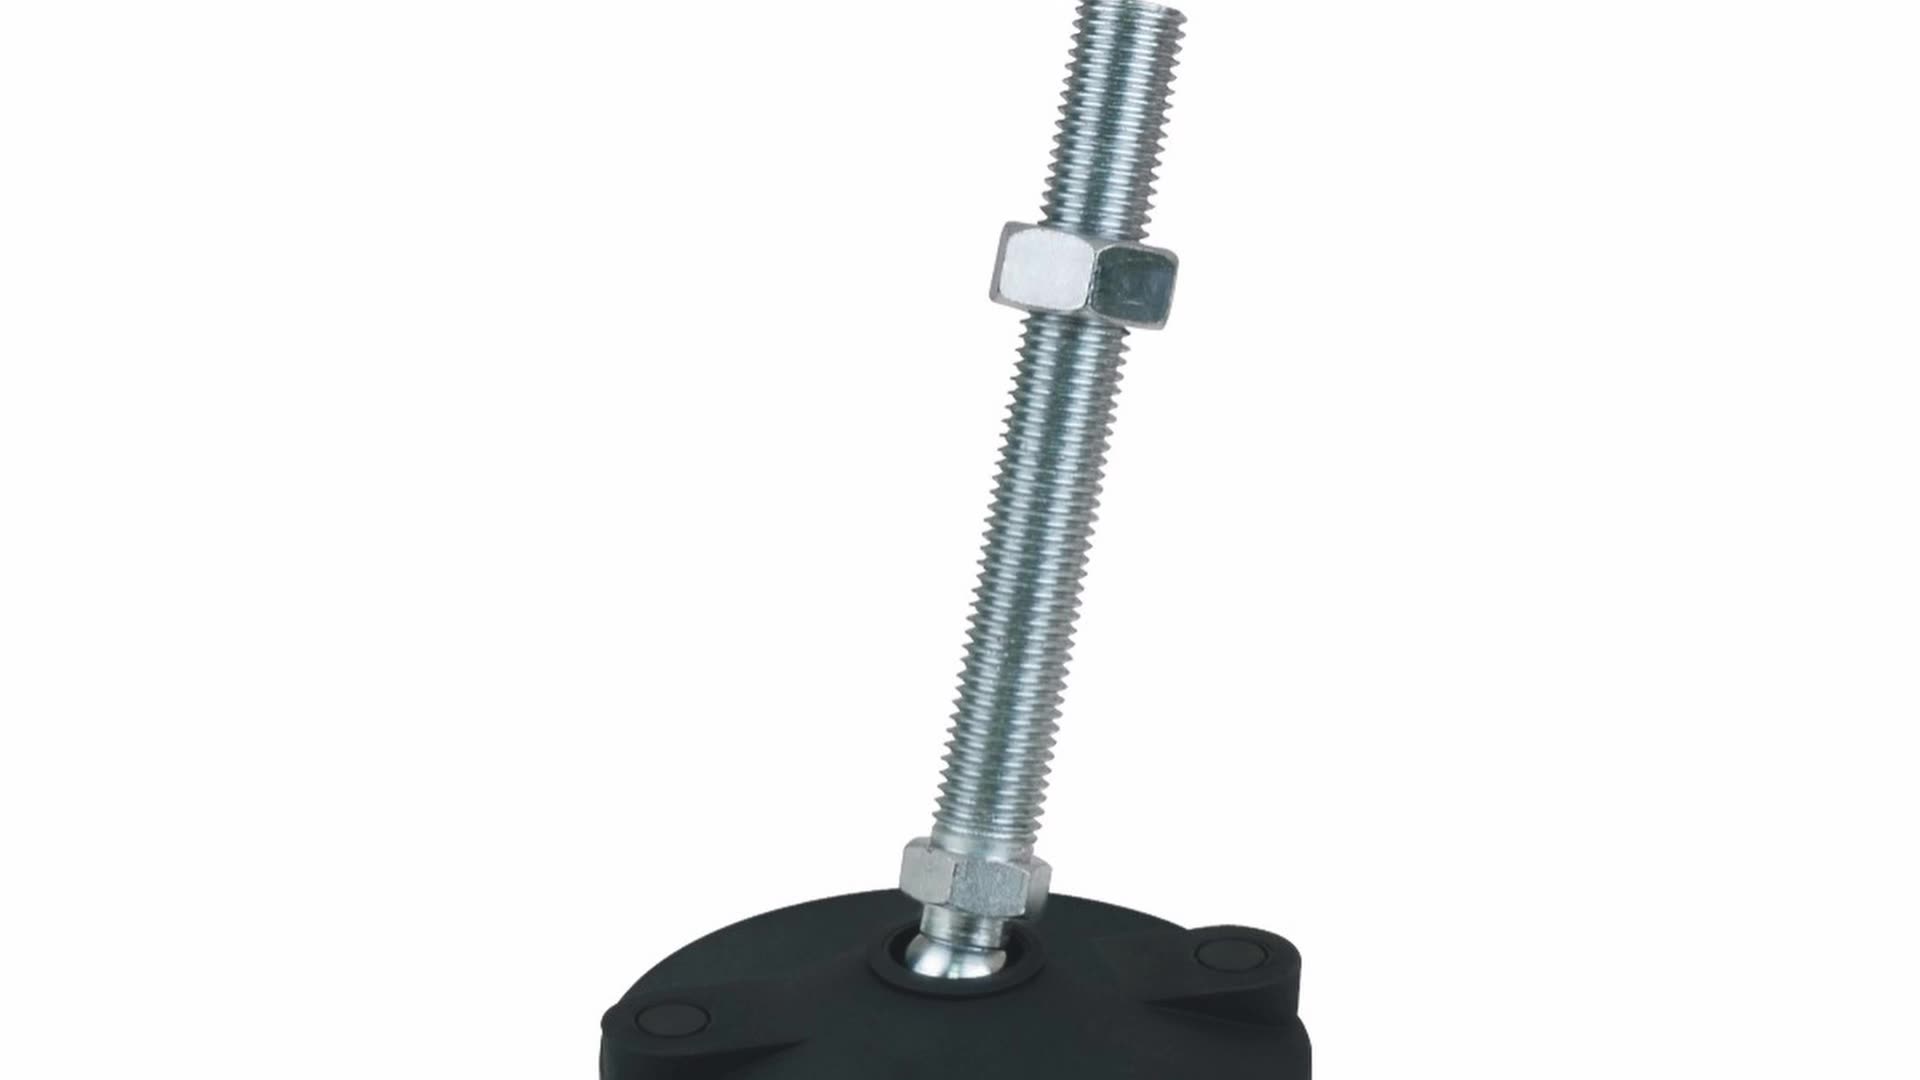 Sampel GRATIS Tugas Berat Nylon Leveling Feet Adjustable M8*50-D40nylon Basis untuk Profil Aluminium Kaki yang Dapat Disesuaikan Leveling Foot1